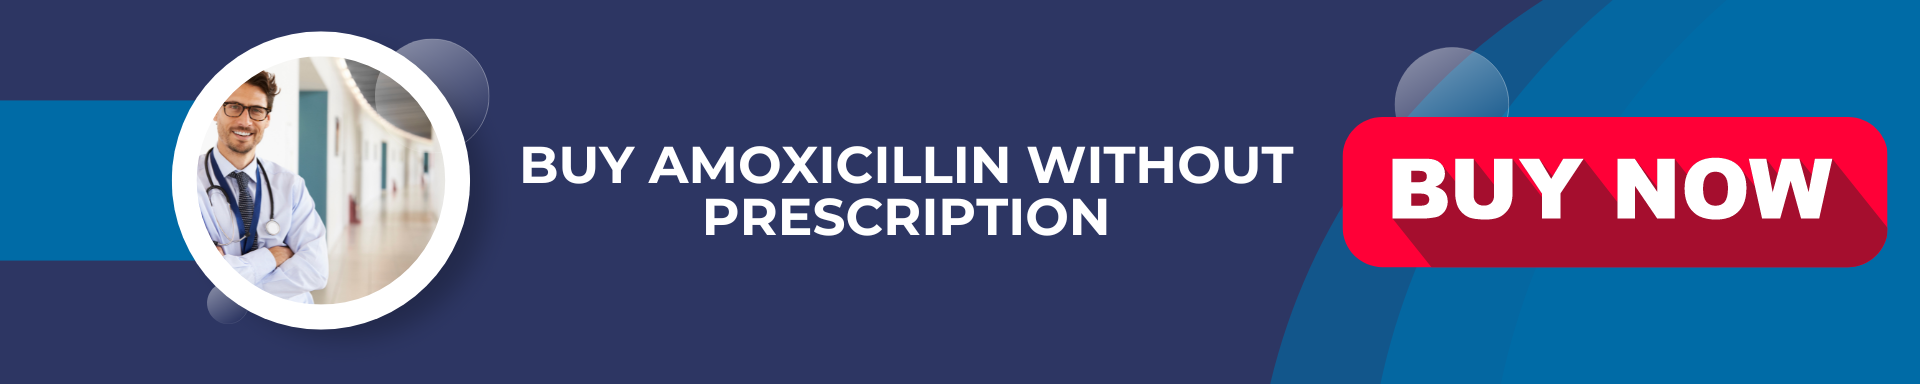 Buy Amoxicillin without prescription